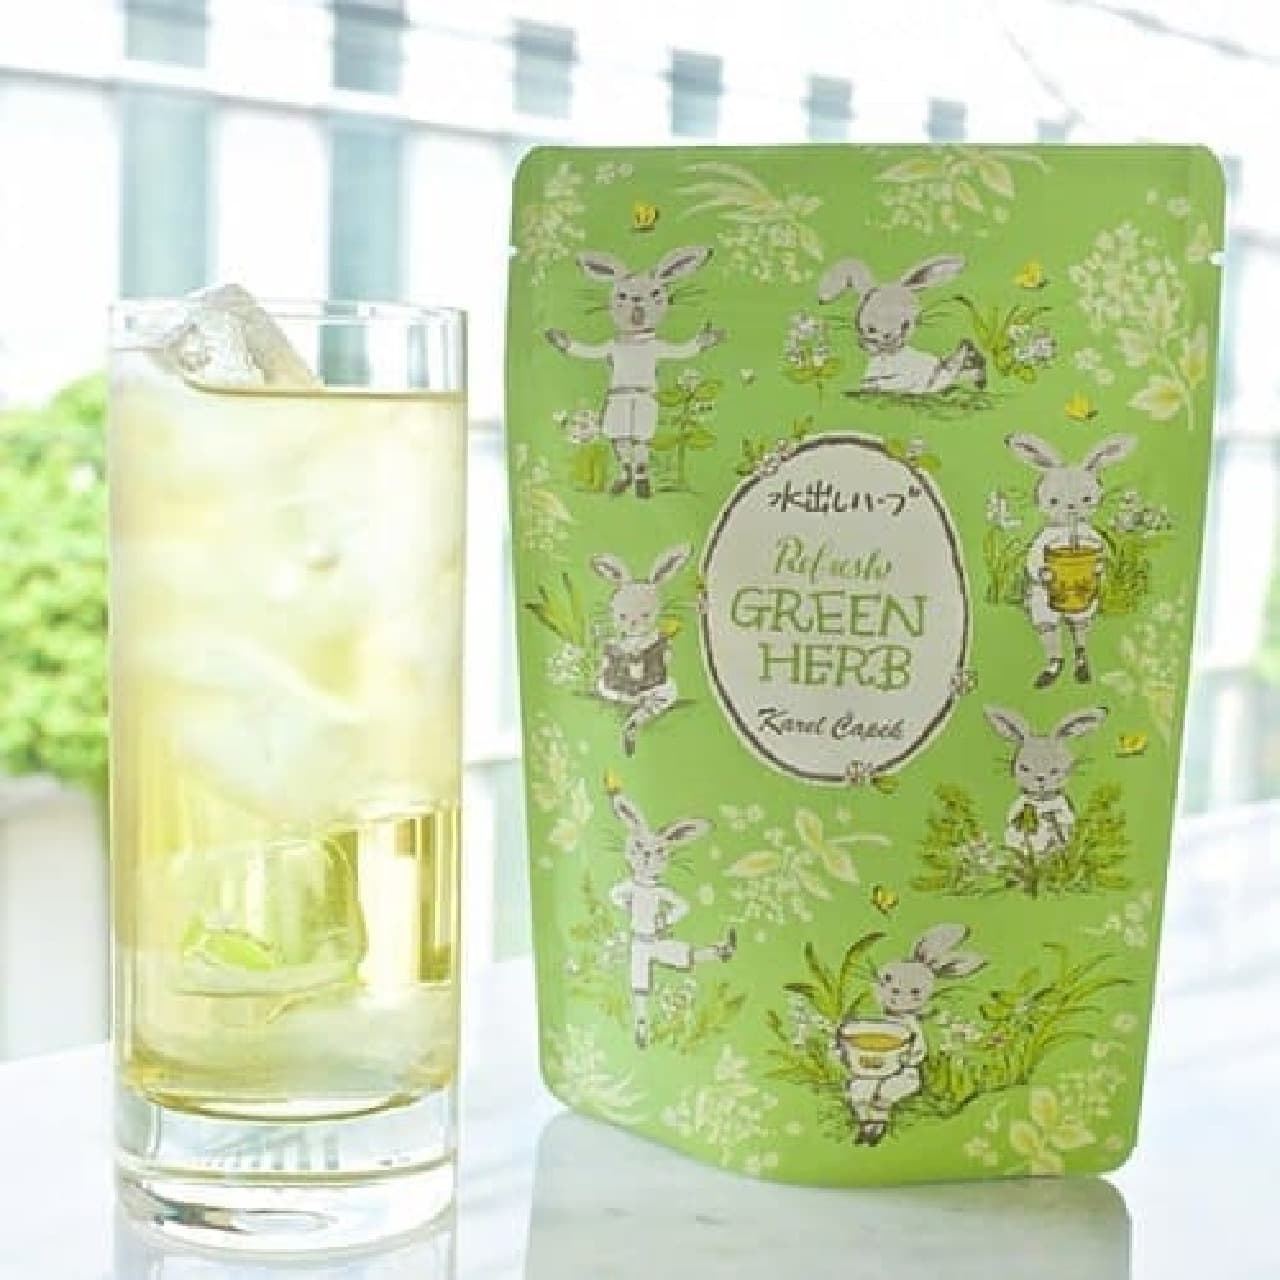 Karel Chapek Tea Shop Watered Herbal Tea